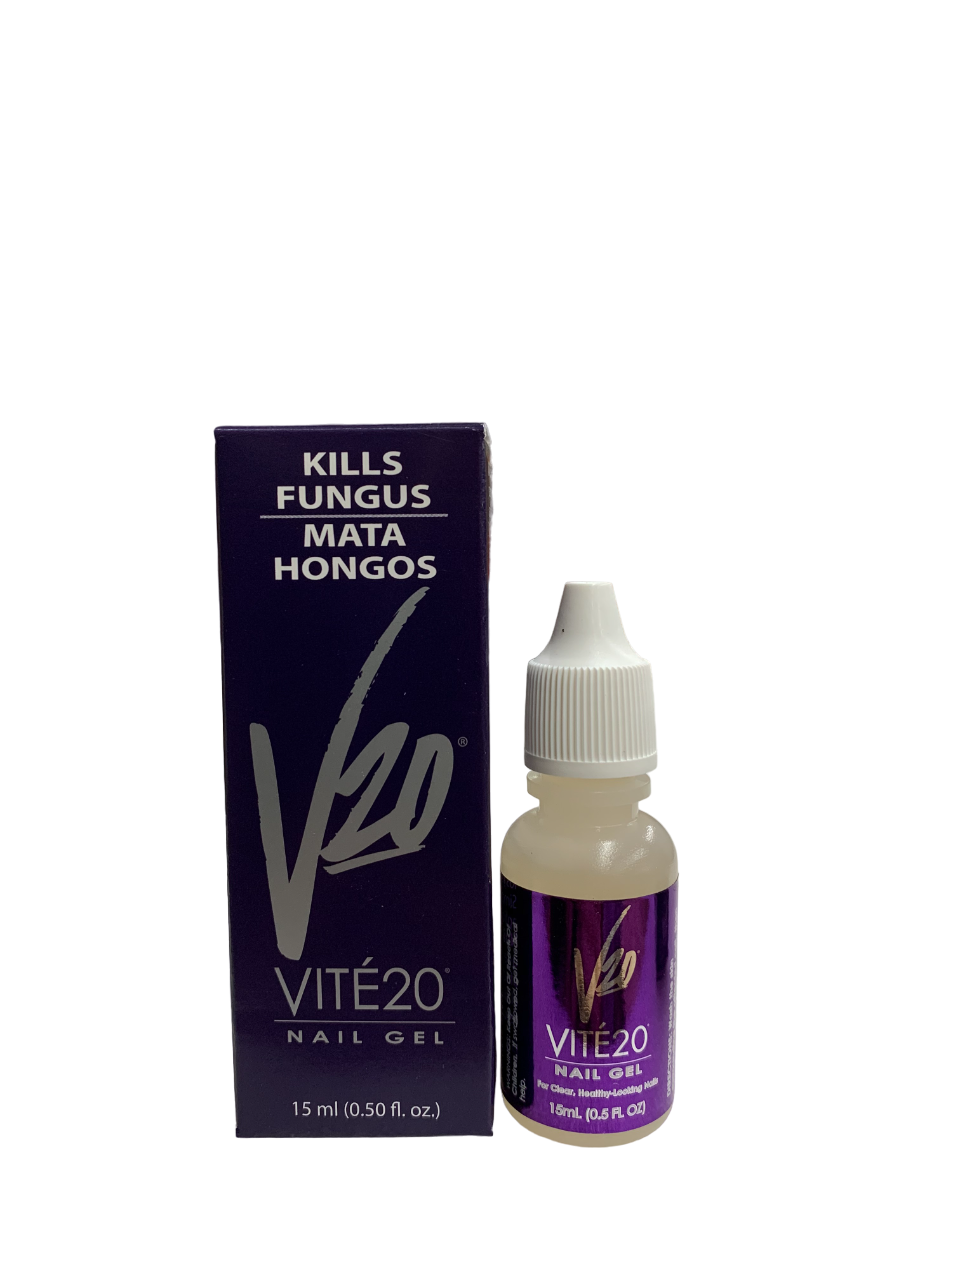 Vite20 Kills Fungus Nail Gel